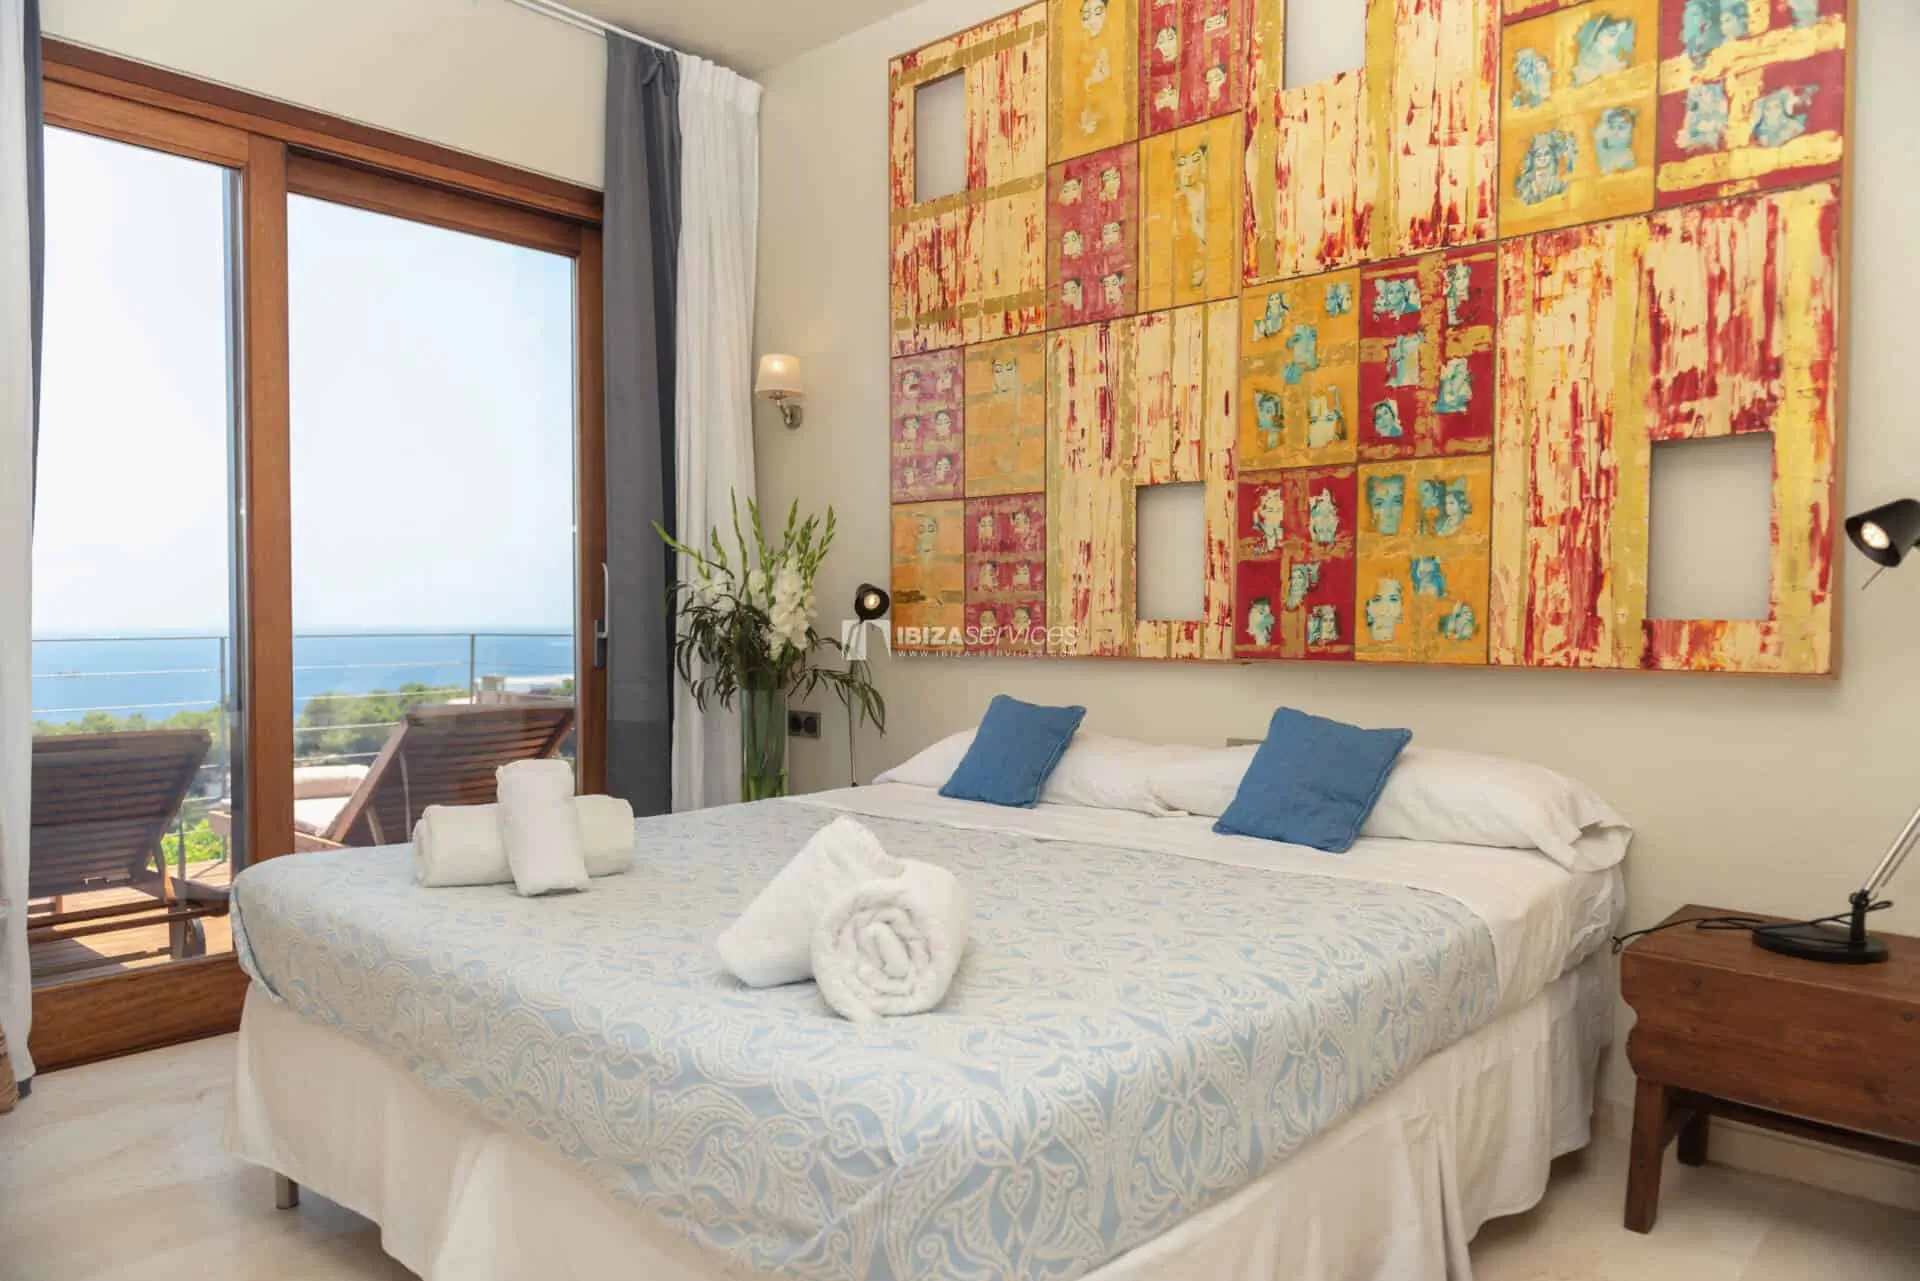 Roca Llisa 5 bedroom holiday villa with seaview